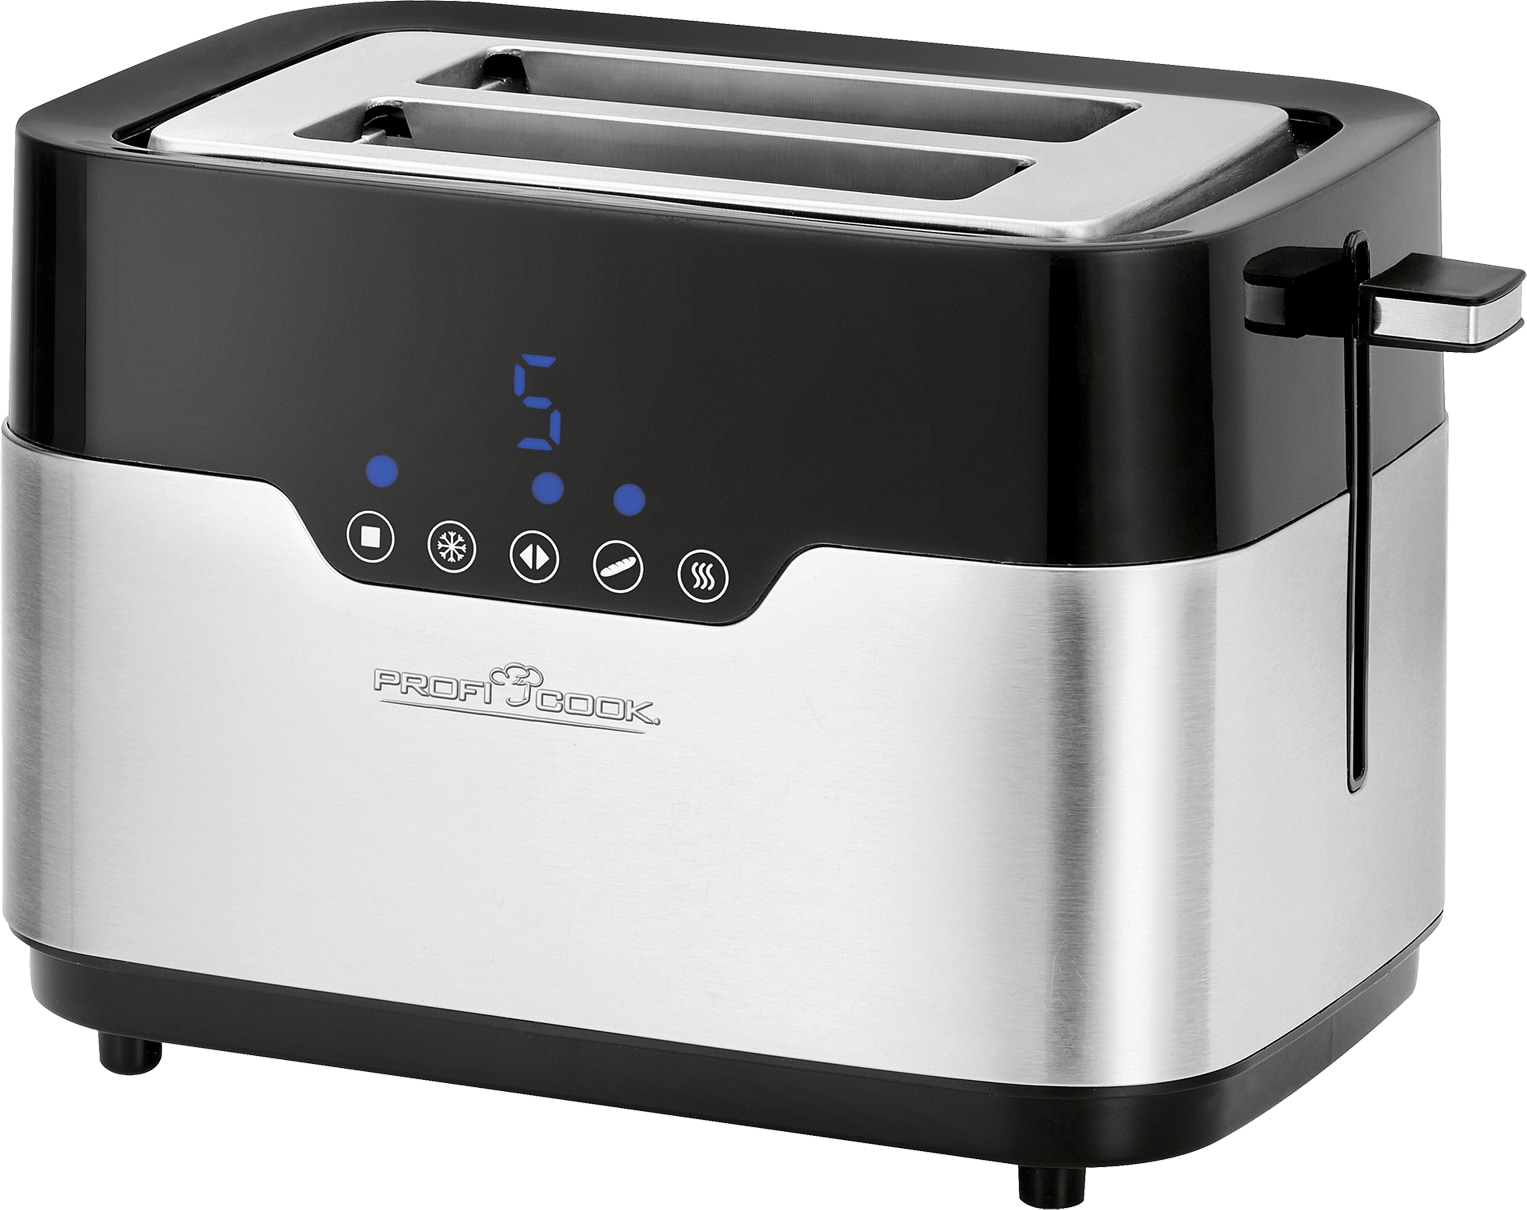 PROFI COOK Toaster PC-TA 1170 inox, Sensor Touch, 920 W